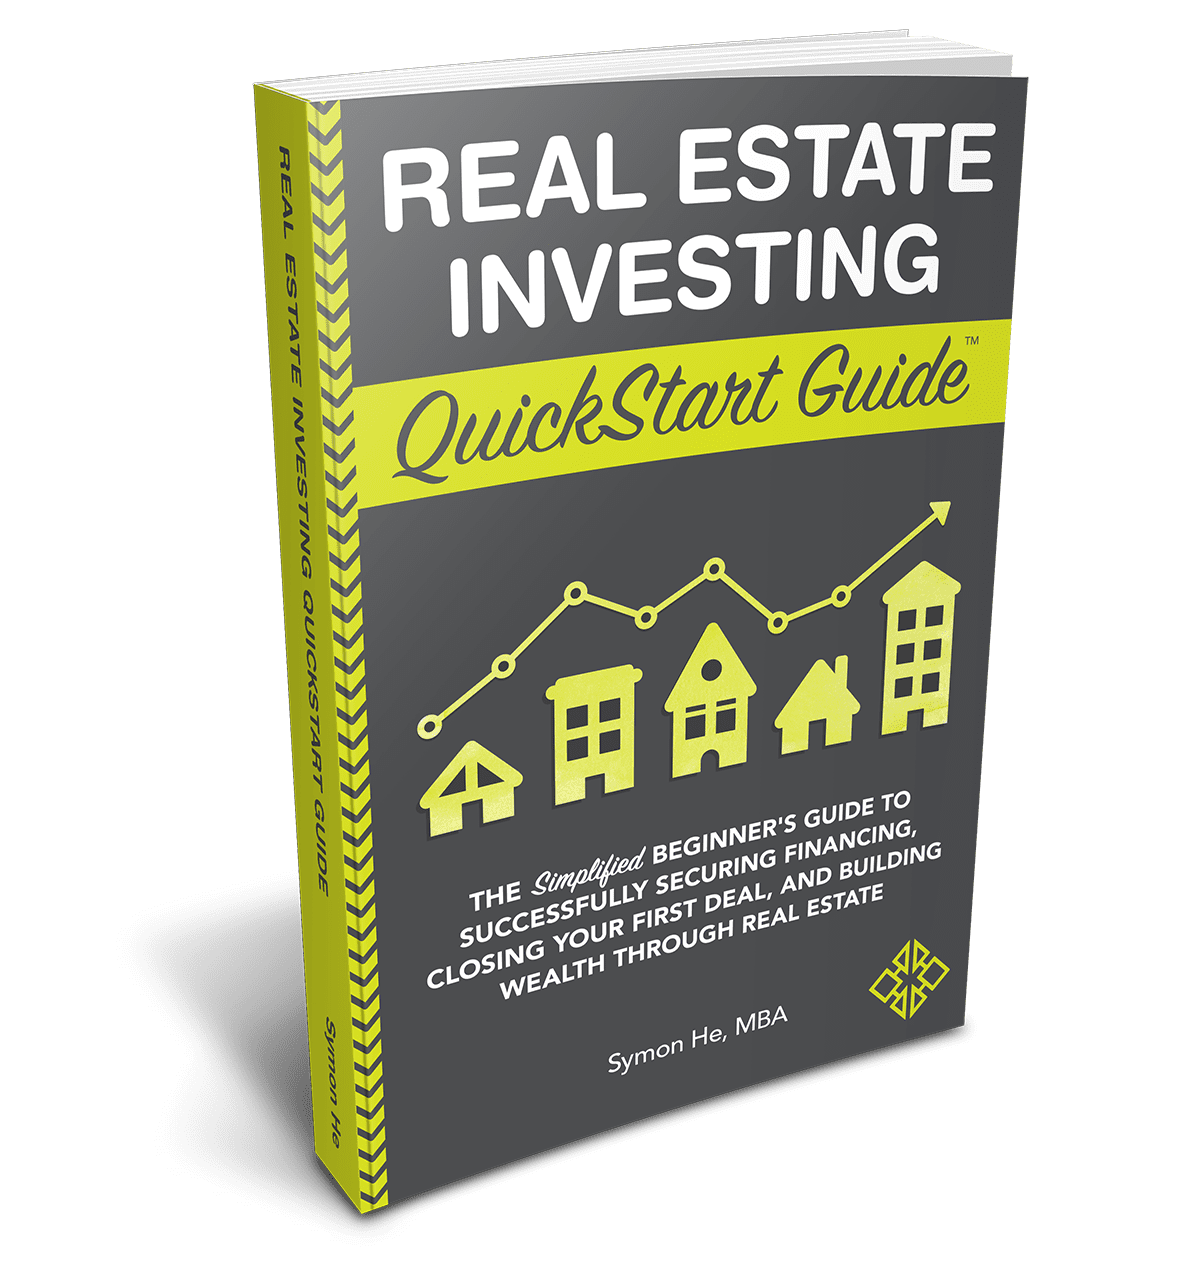 Real Estate Investing QuickStart Guide by veteran real estate investor Symon He